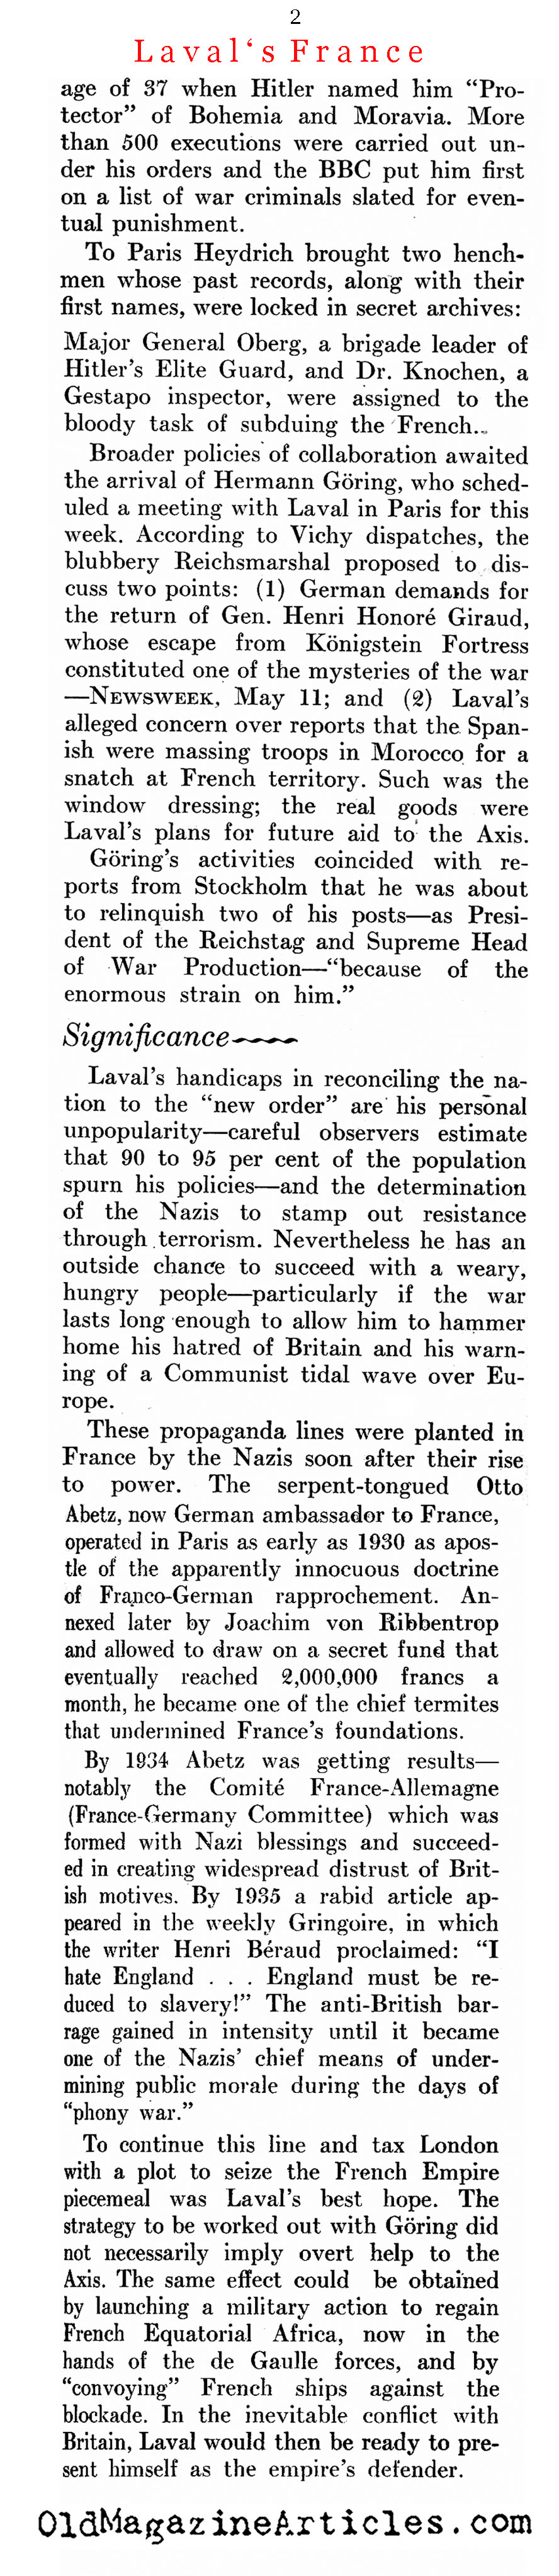 Laval's France (Newsweek Magazine, 1942)